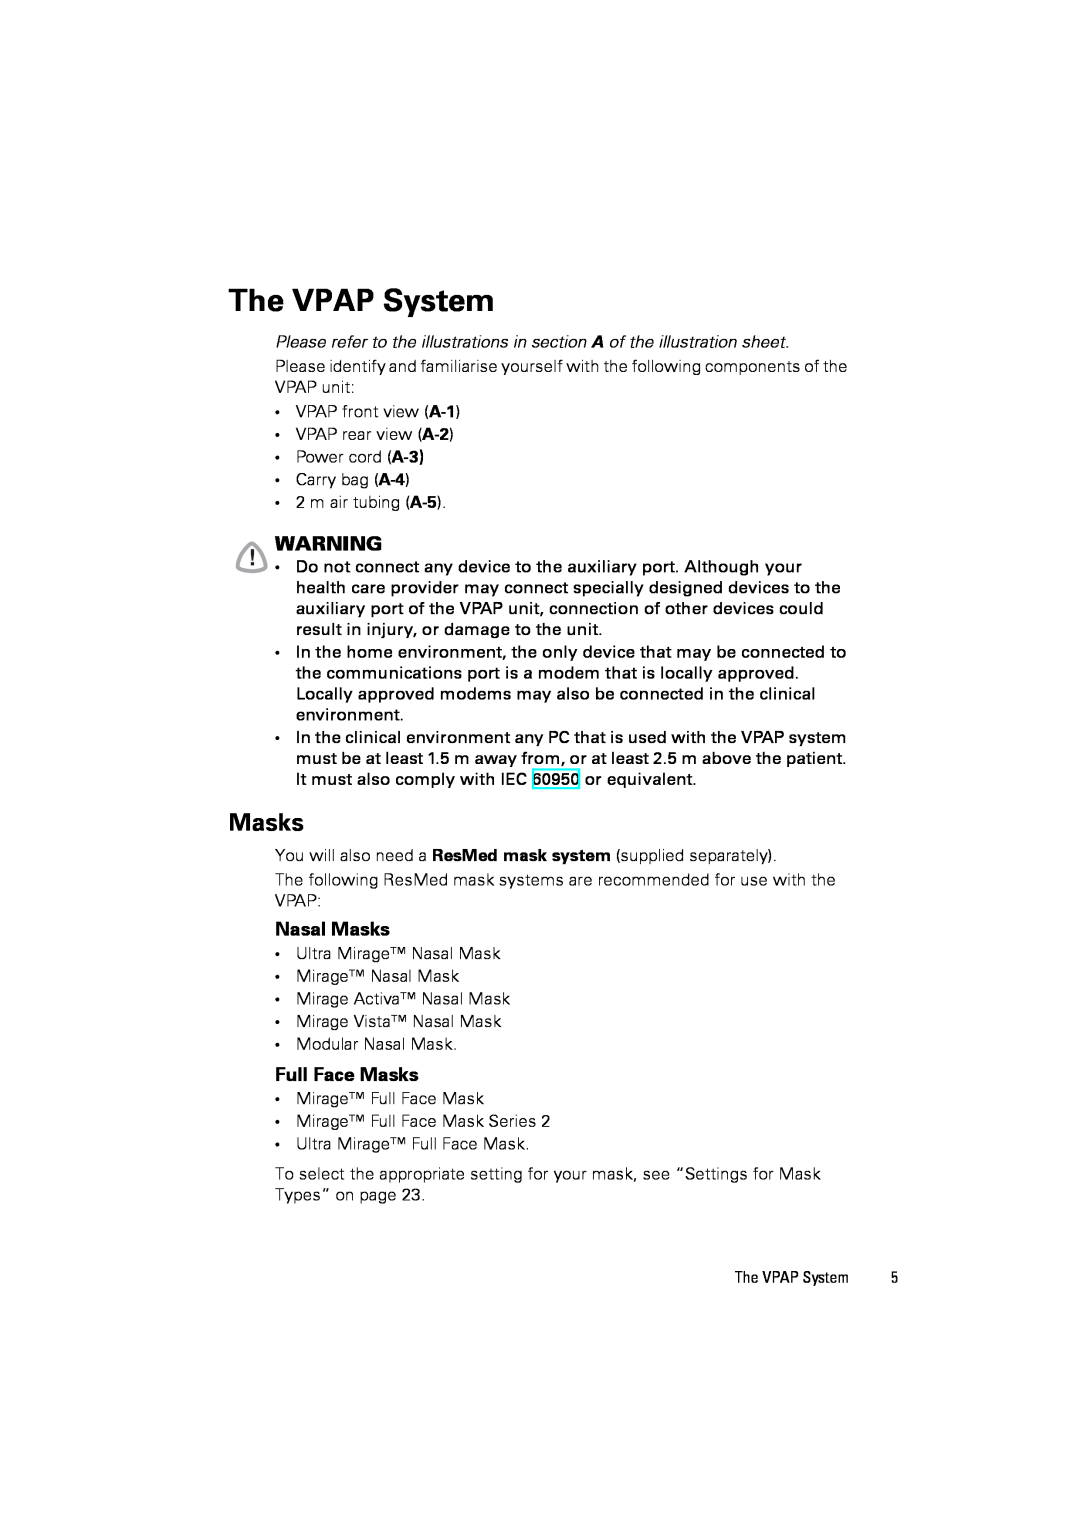 ResMed III user manual The VPAP System, Nasal Masks, Full Face Masks 